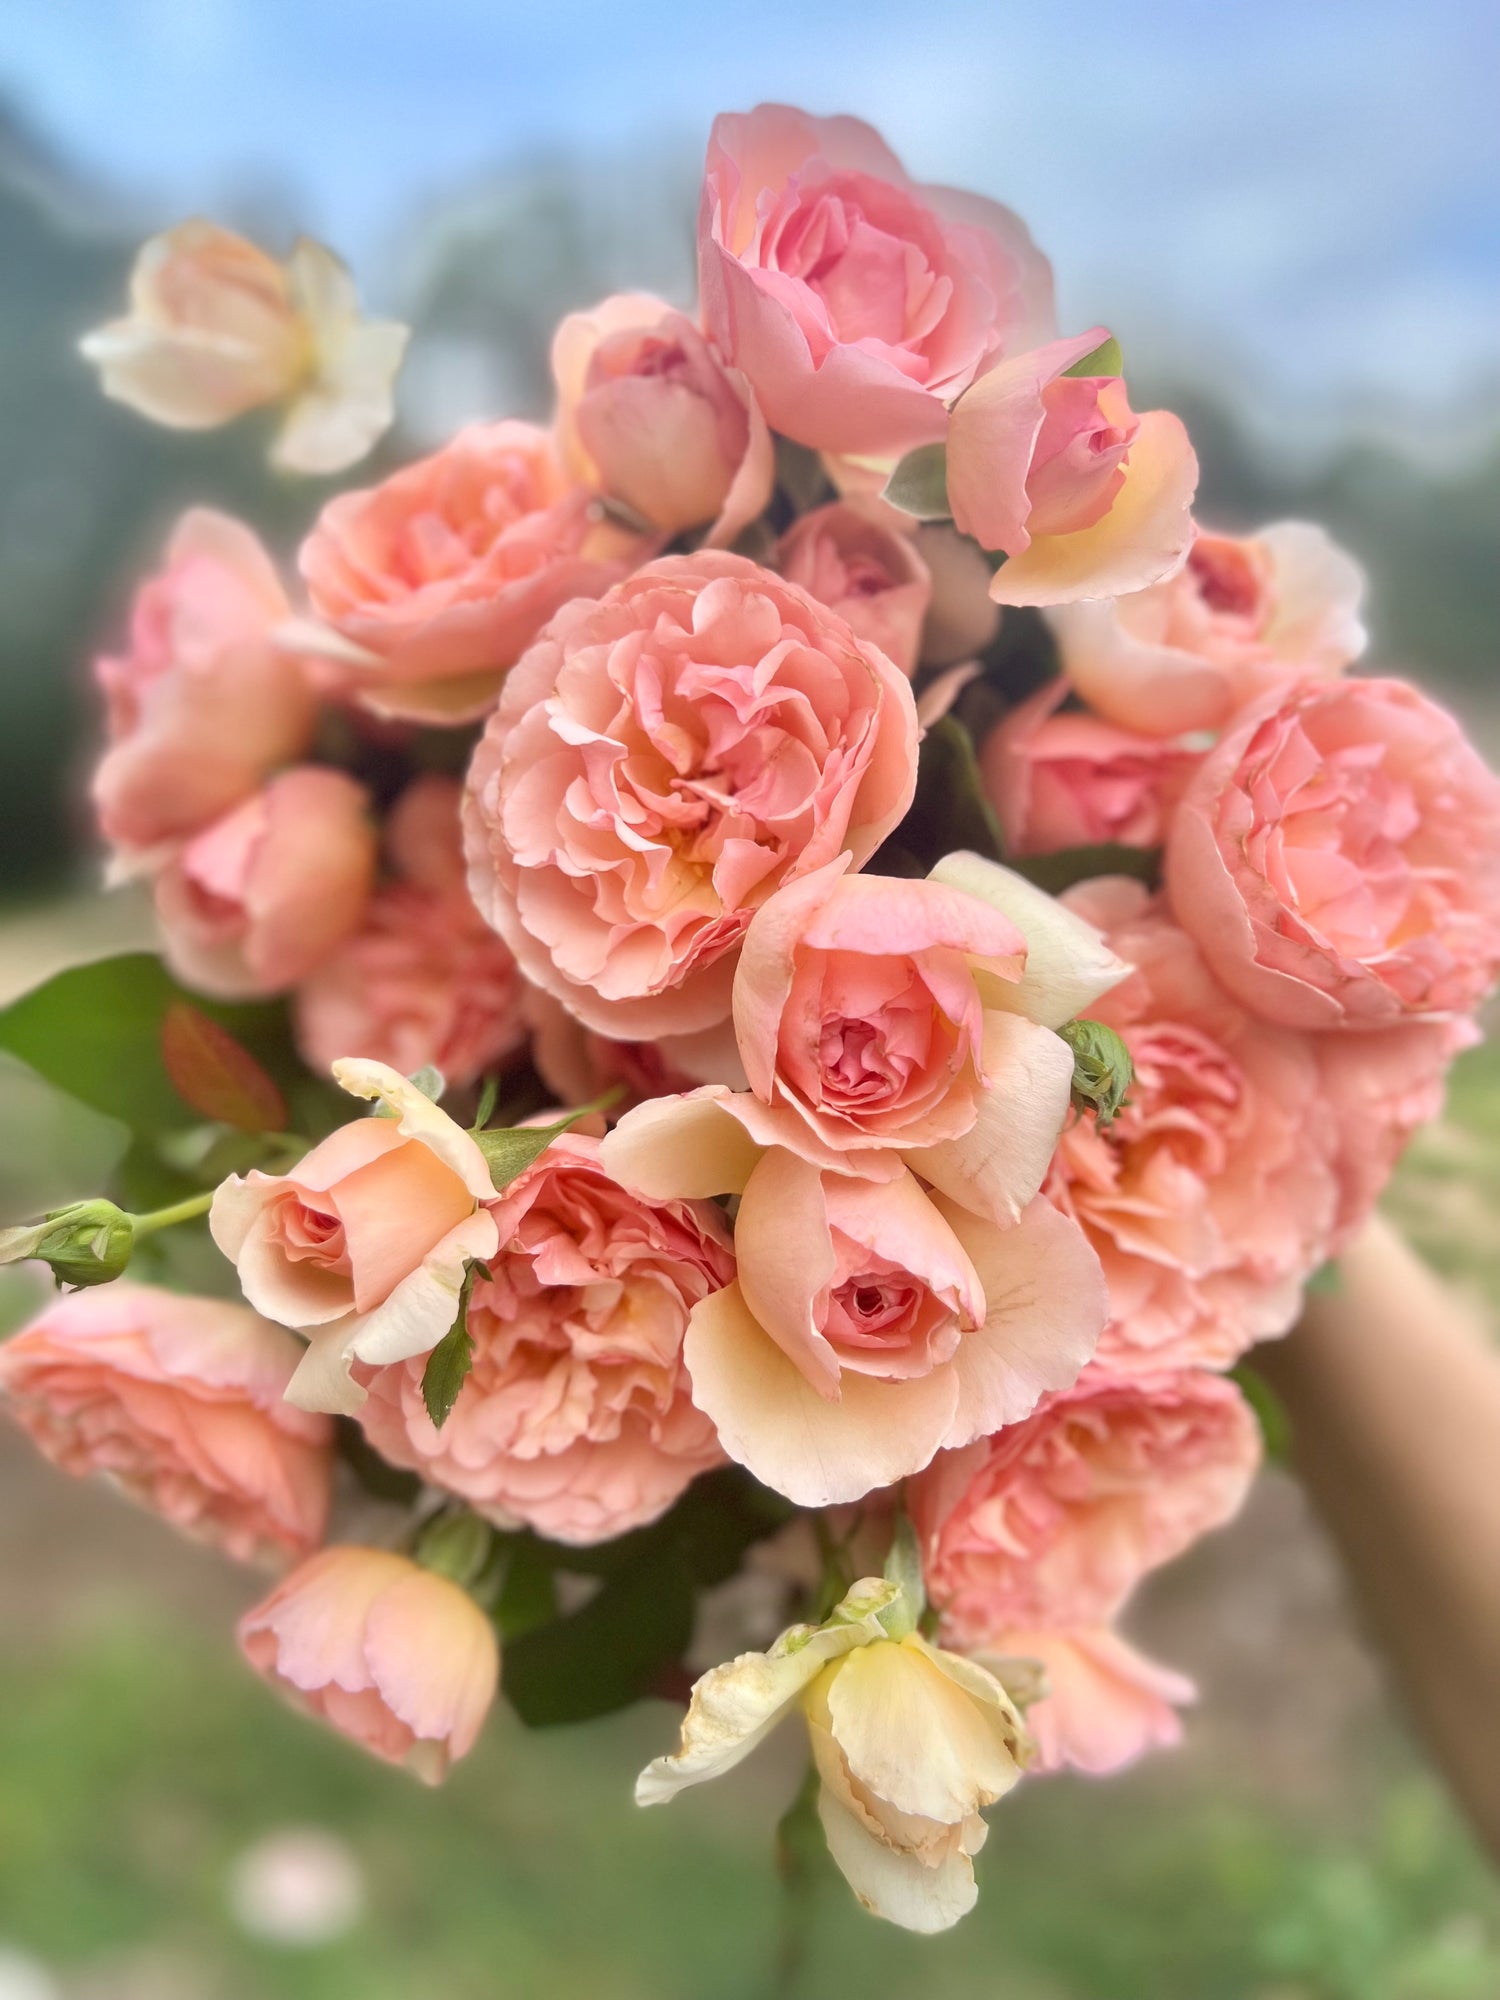 Hot Pink Rose - Virgin Farms -Hot Pink Roses Varieties